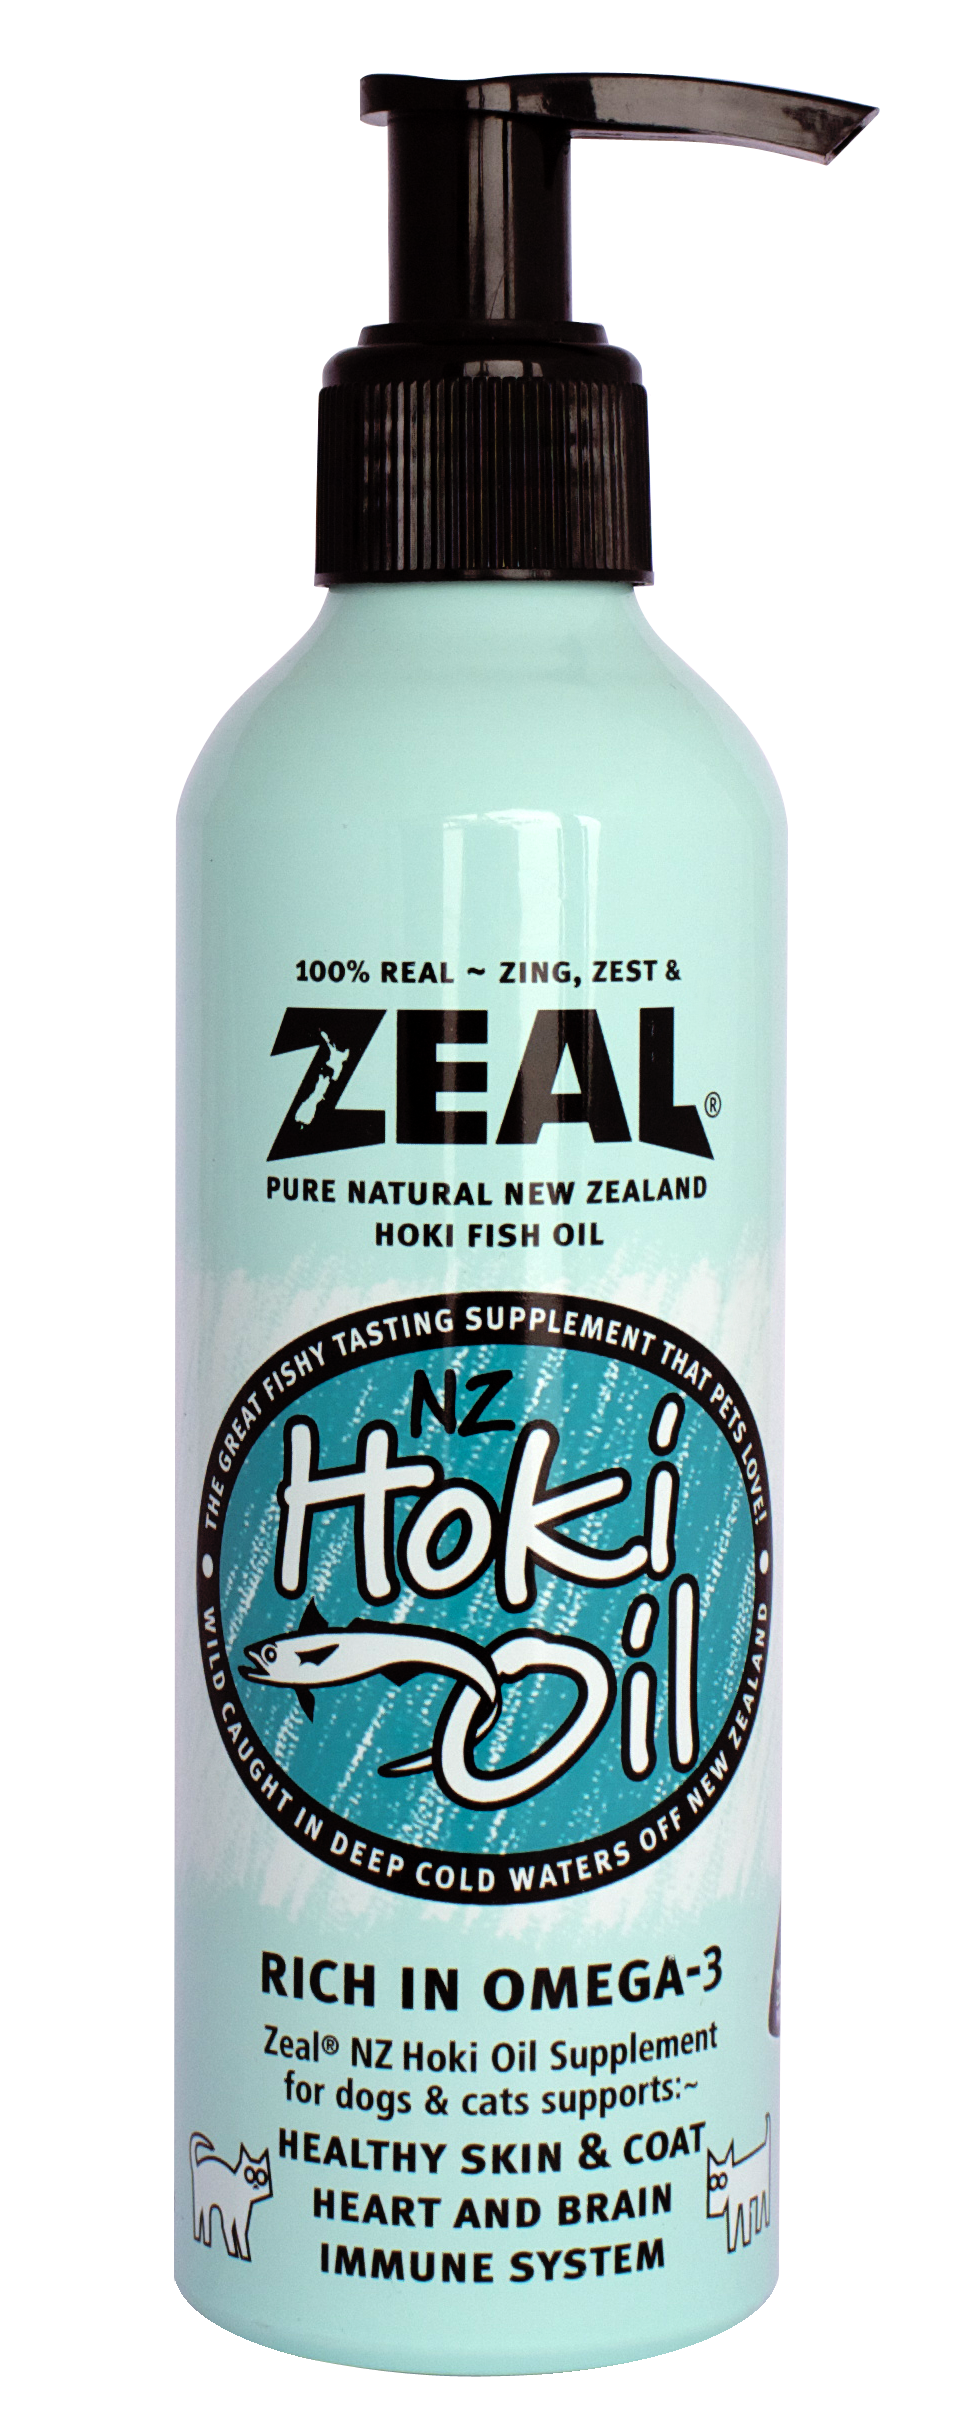 Zeal Hoki Fish Oil Supplement